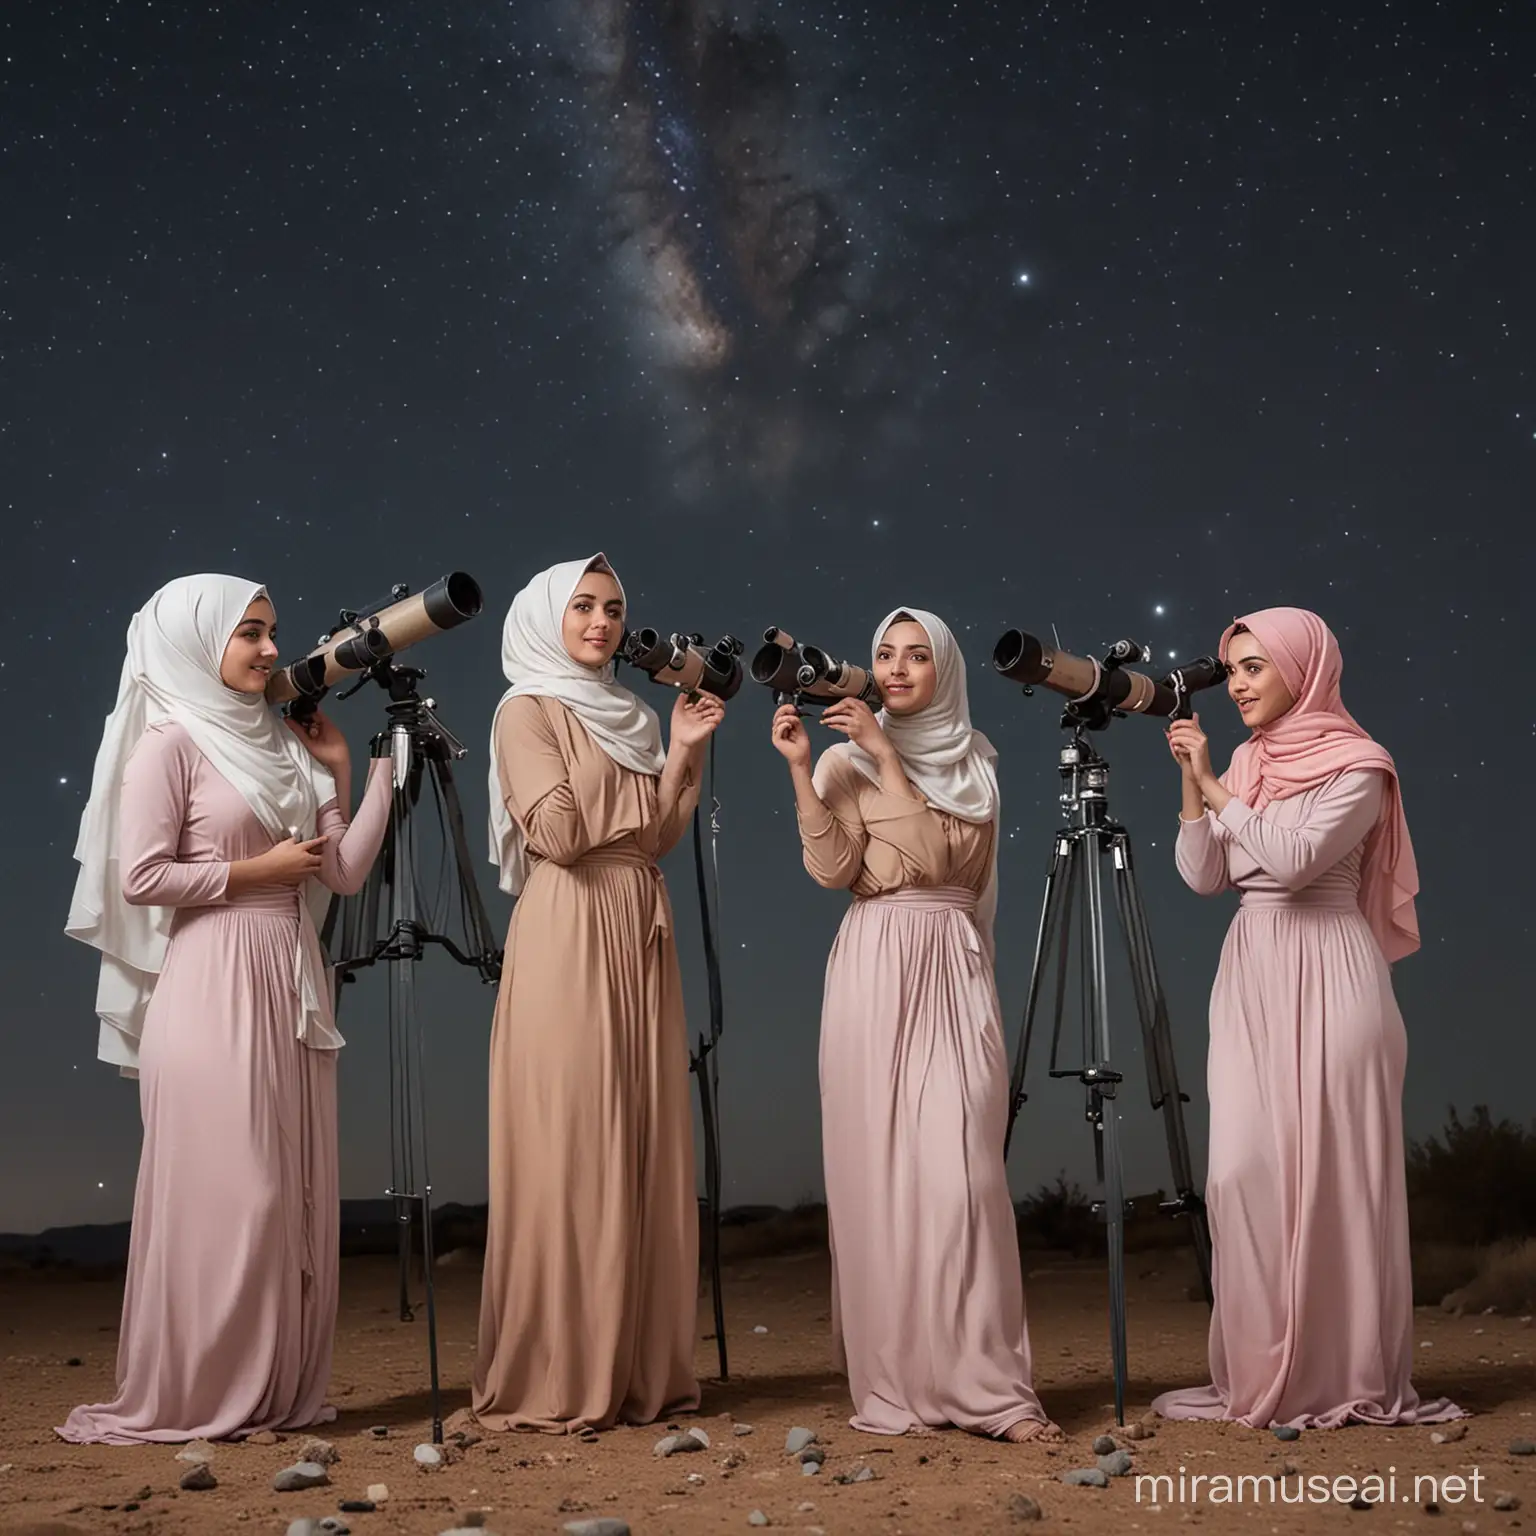 Women in Hijabs Stargazing Under the Night Sky